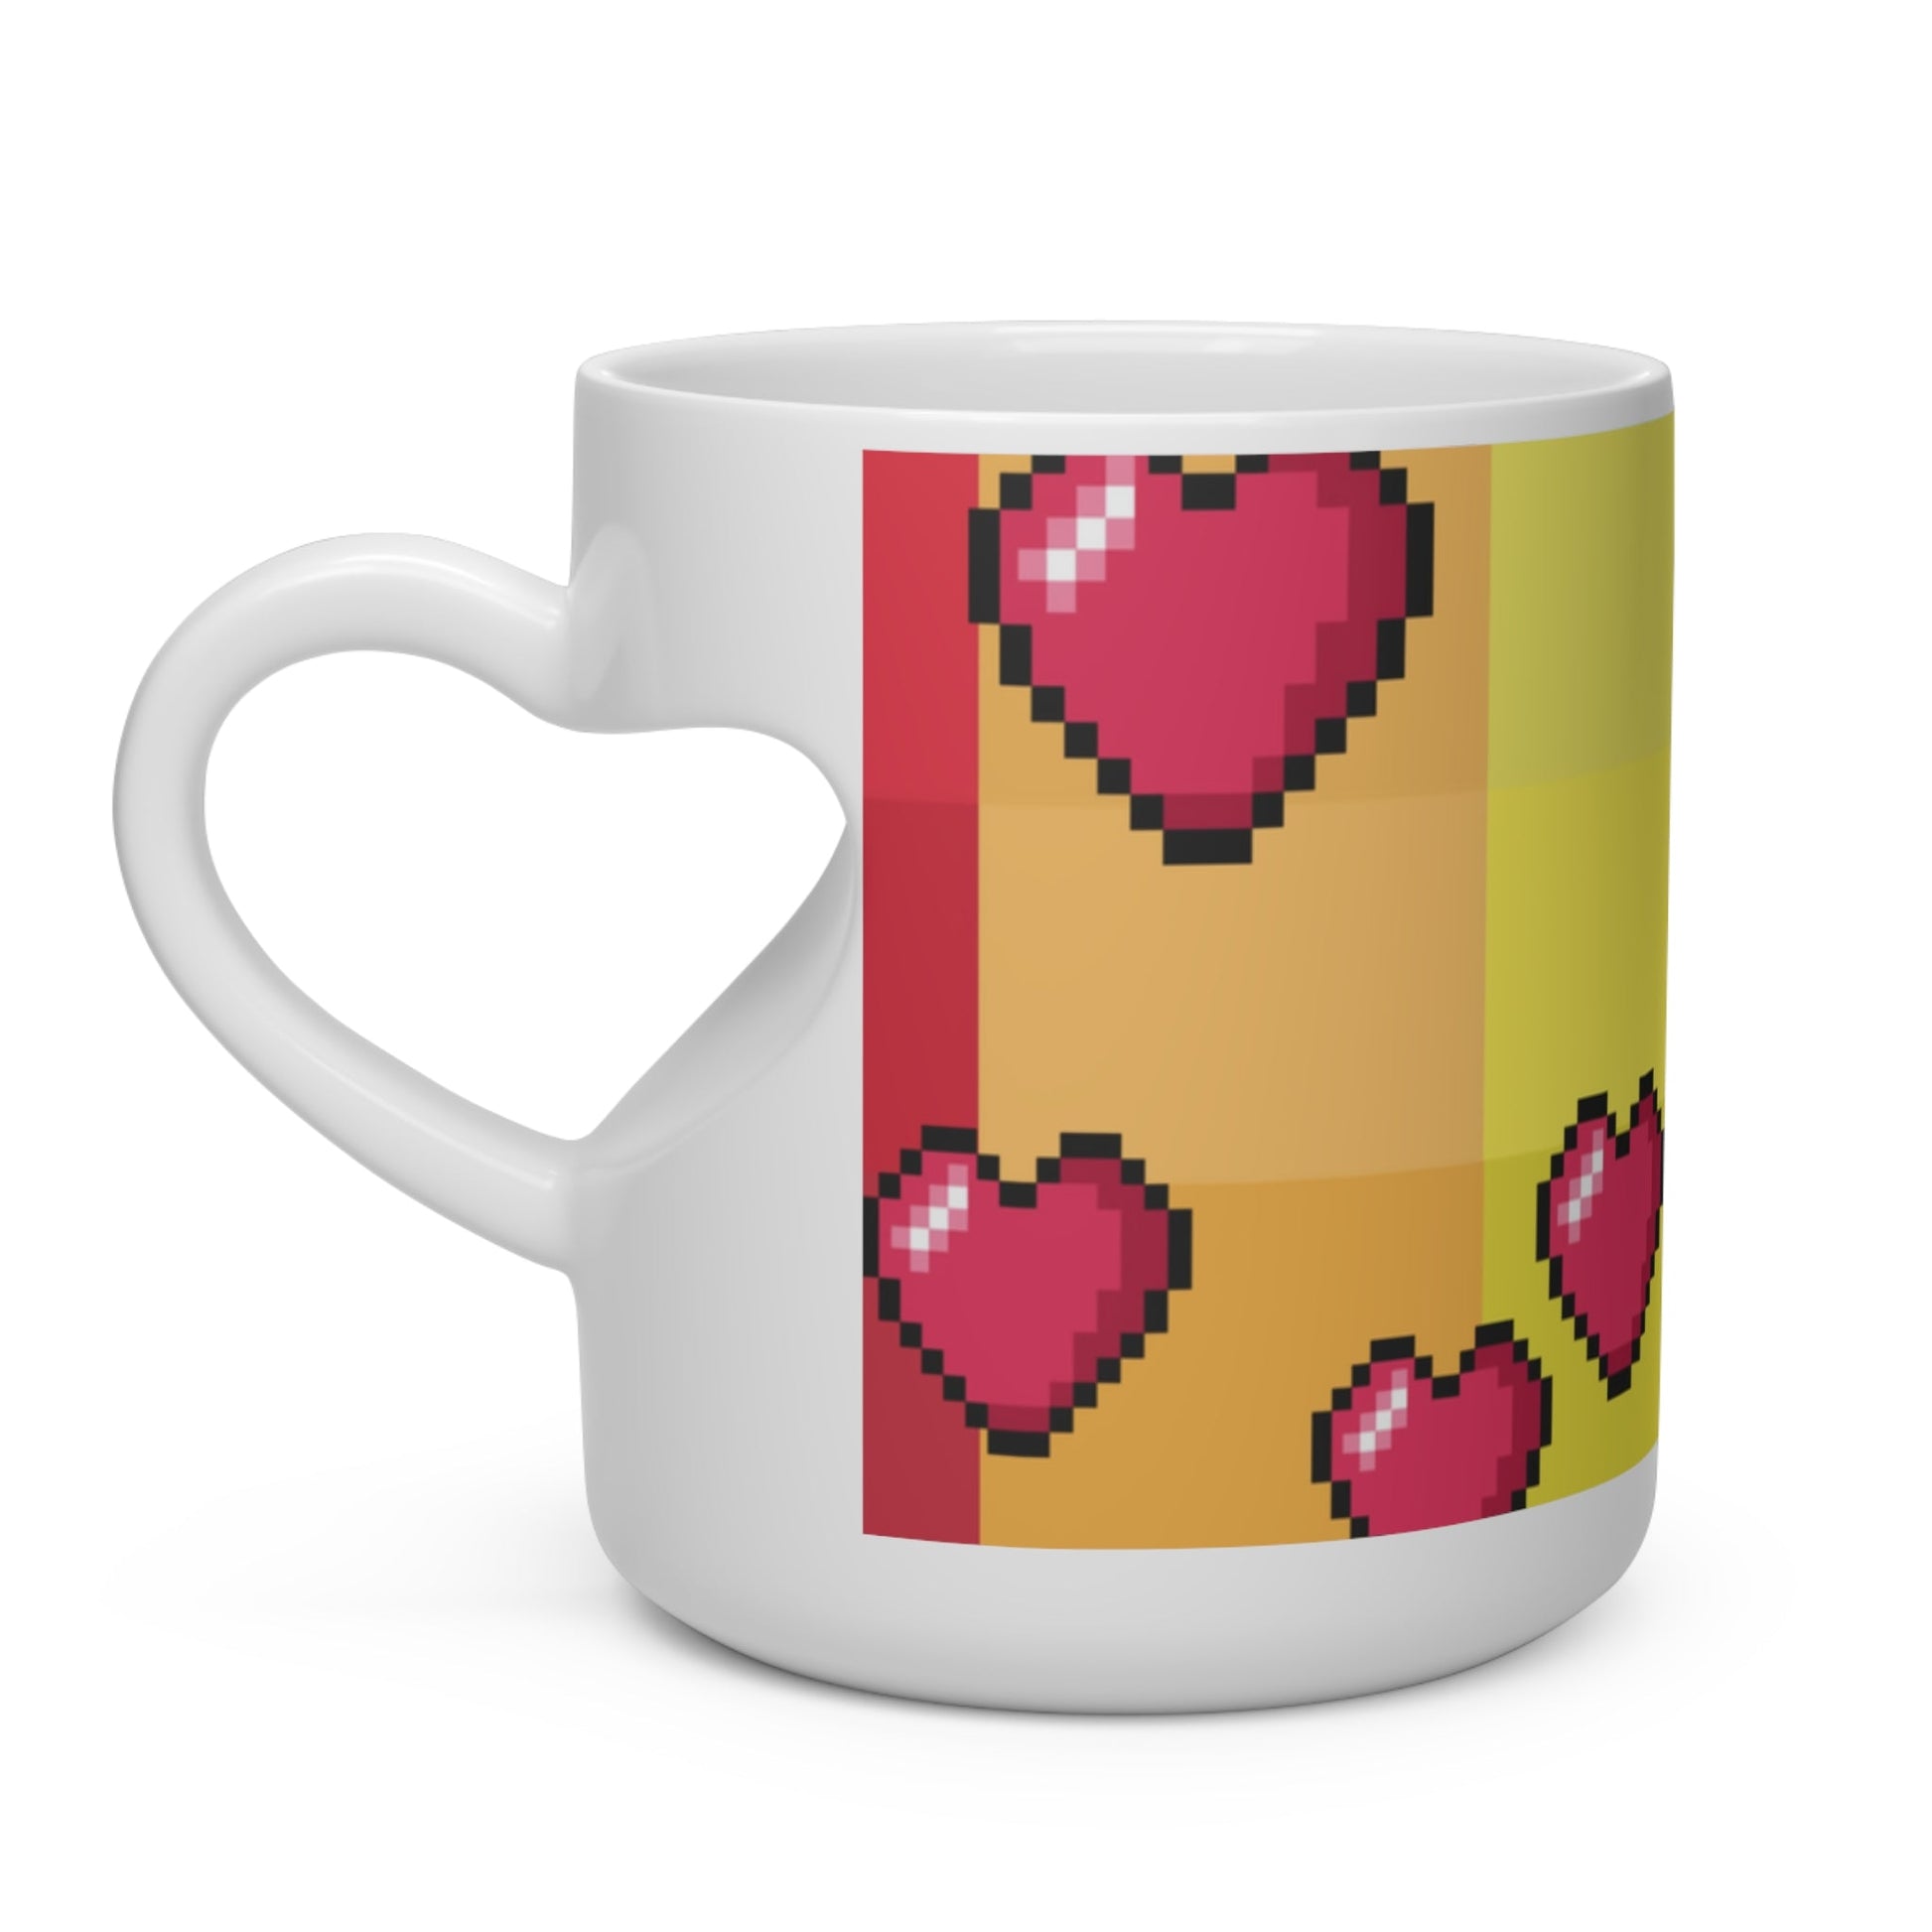 Mug - Heart Shape Mug